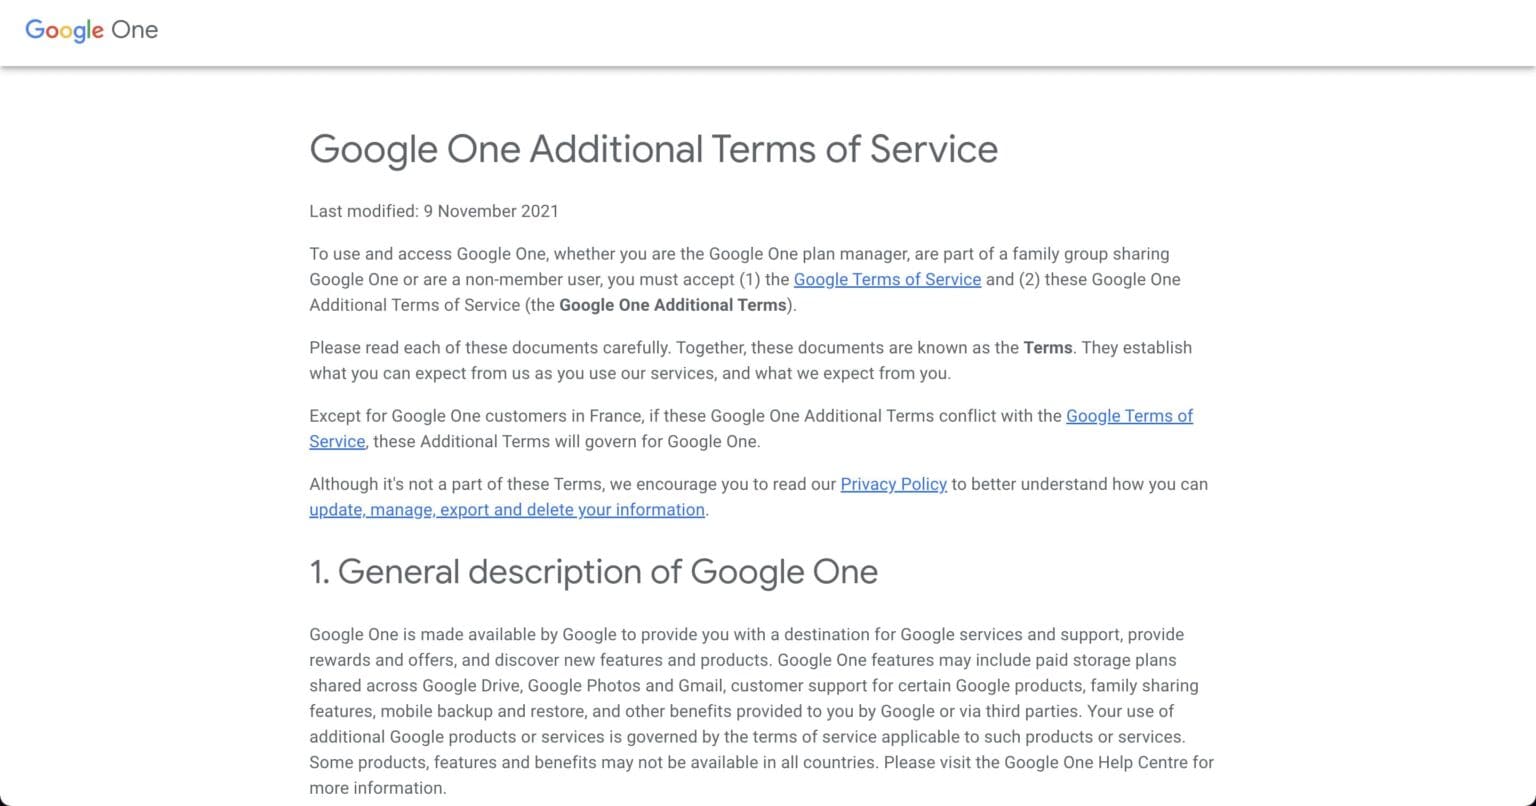 Google OneにVPNを通して契約することを禁止する記載は確認できず